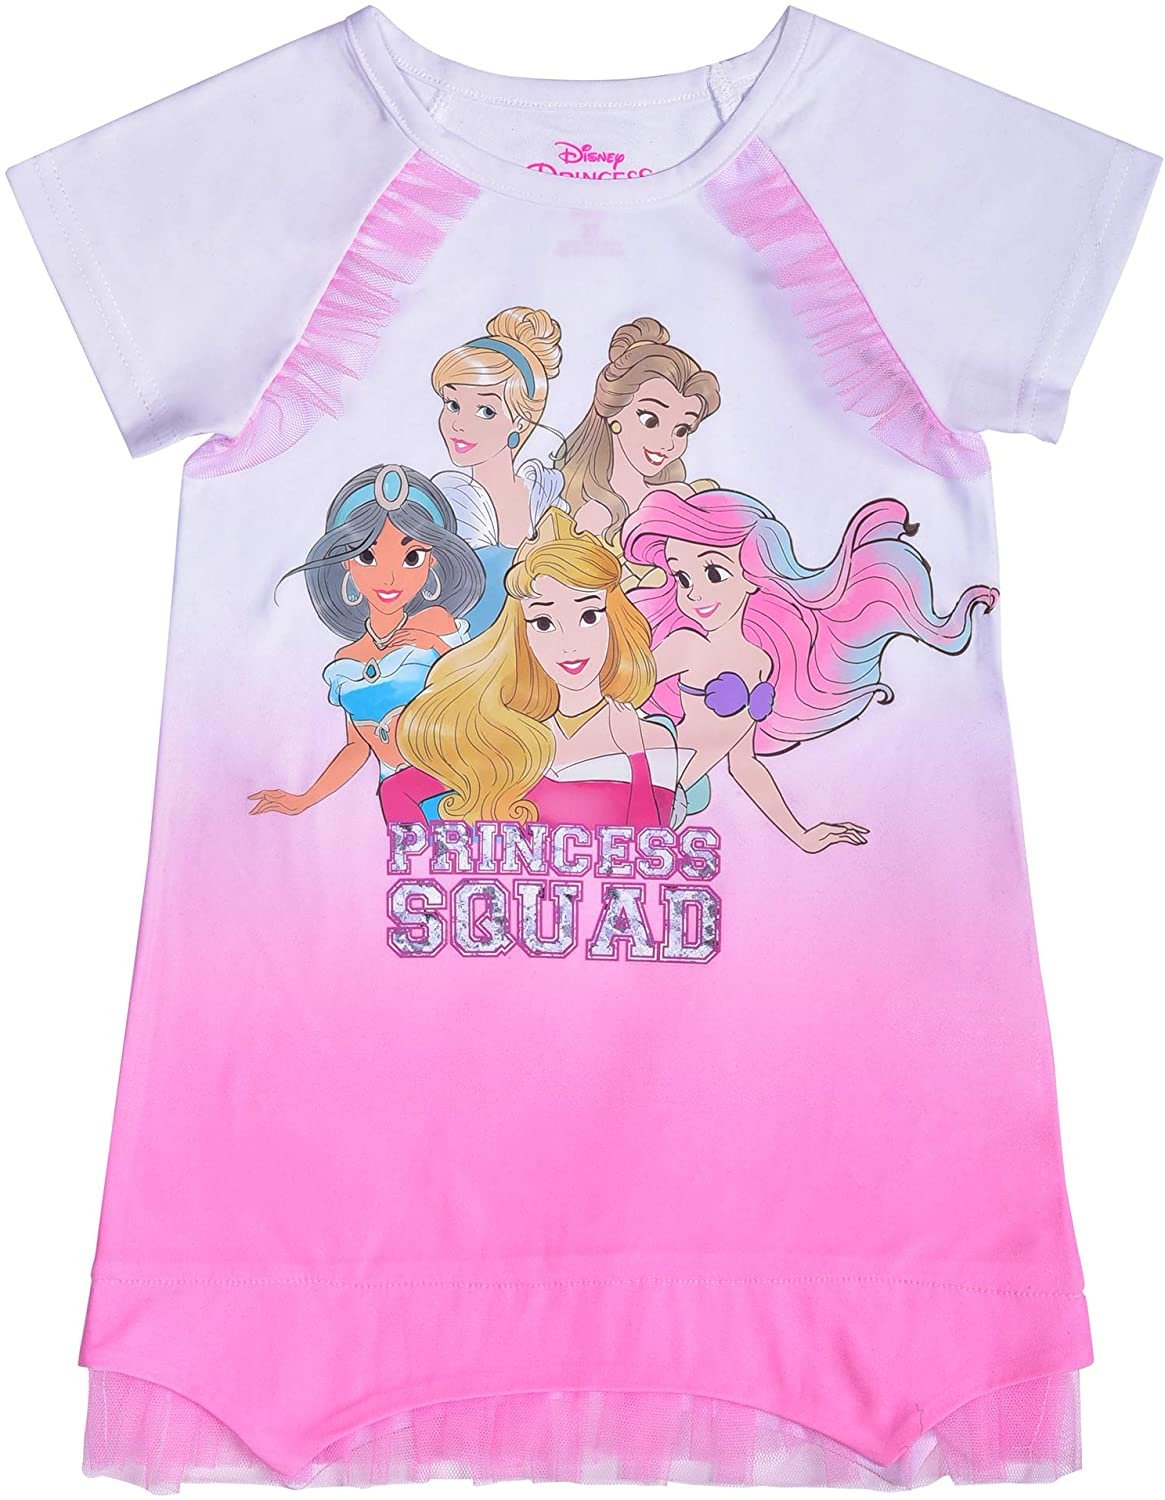 Disney Princess Squad Dress for Girls, Short Sleeve Dress for Toddlers - image 1 of 2